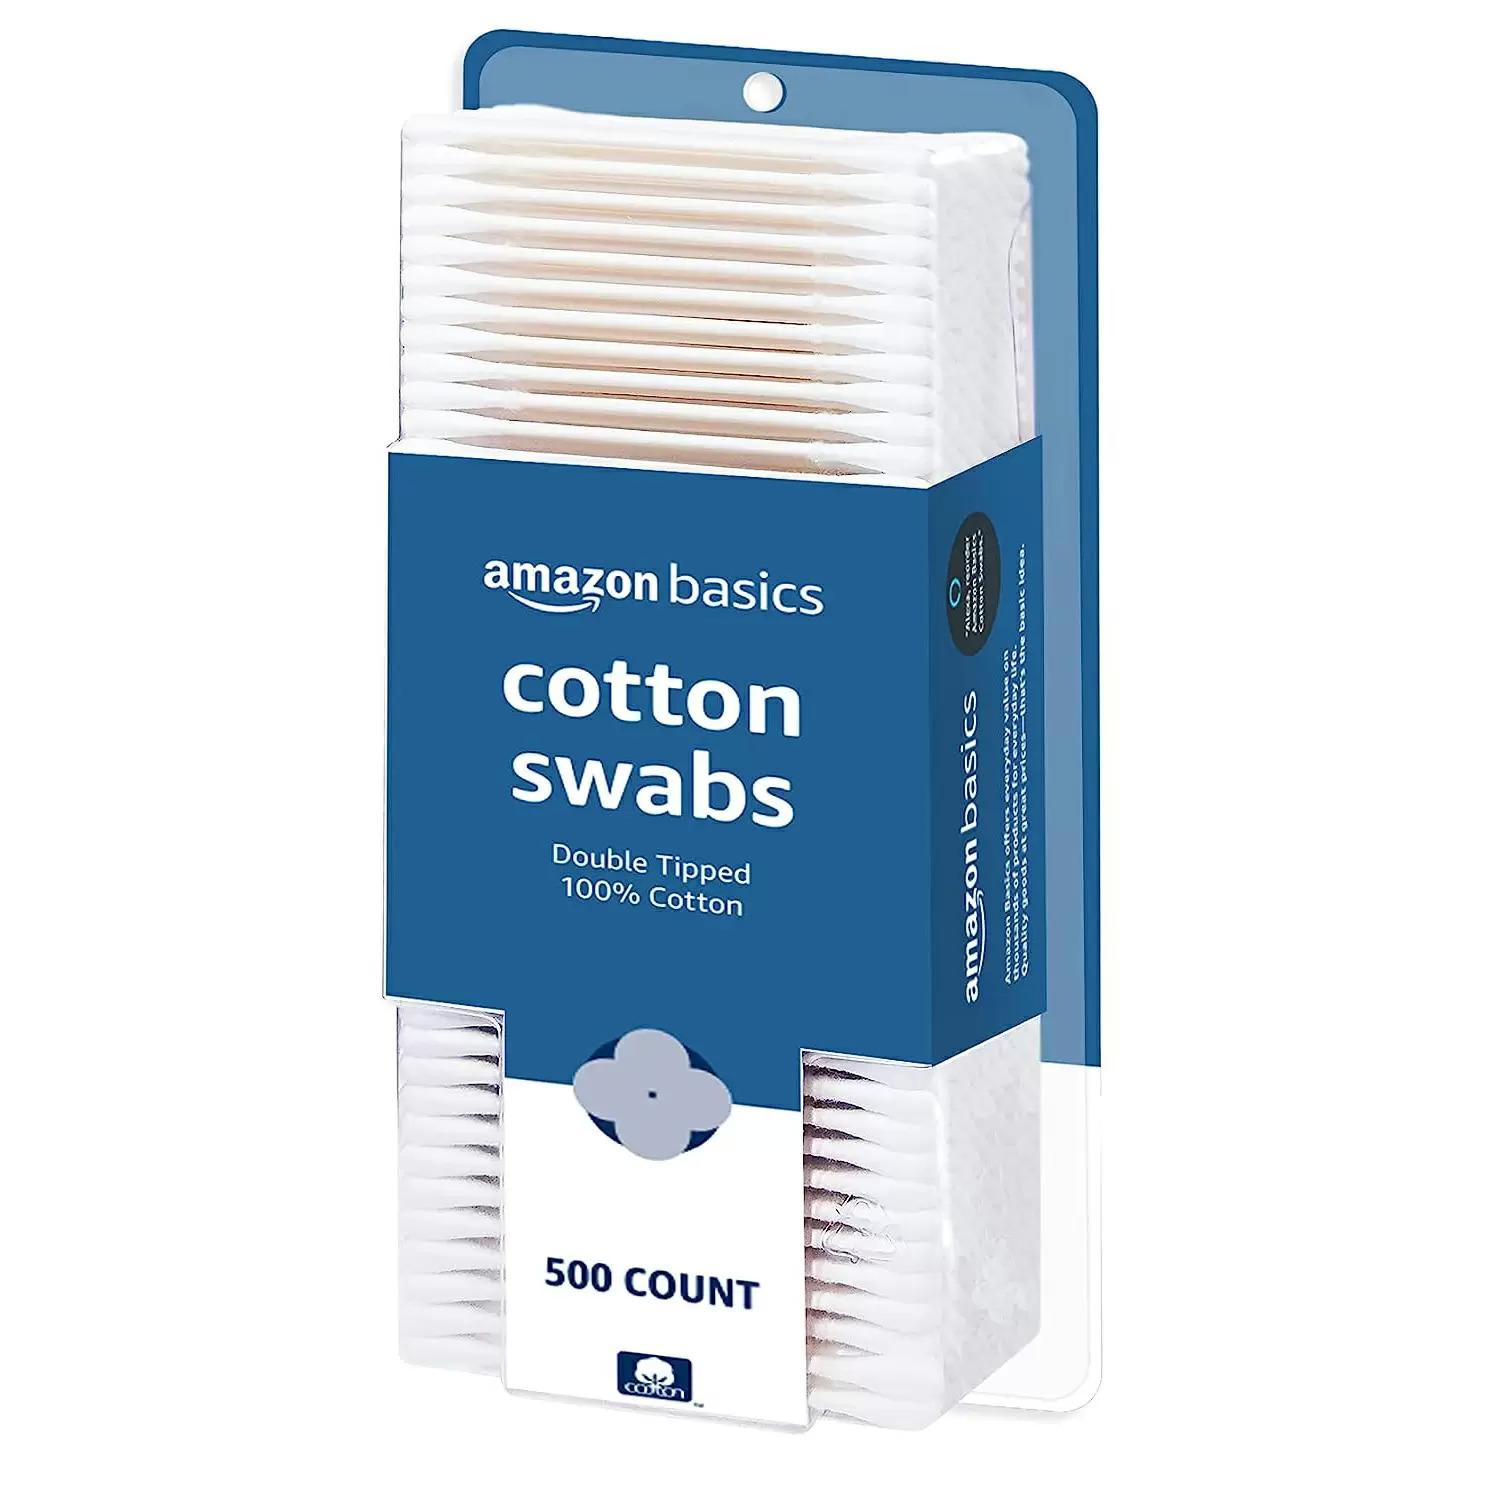 Amazon Basics 500 Cotton Swabs for $2.07 Shipped